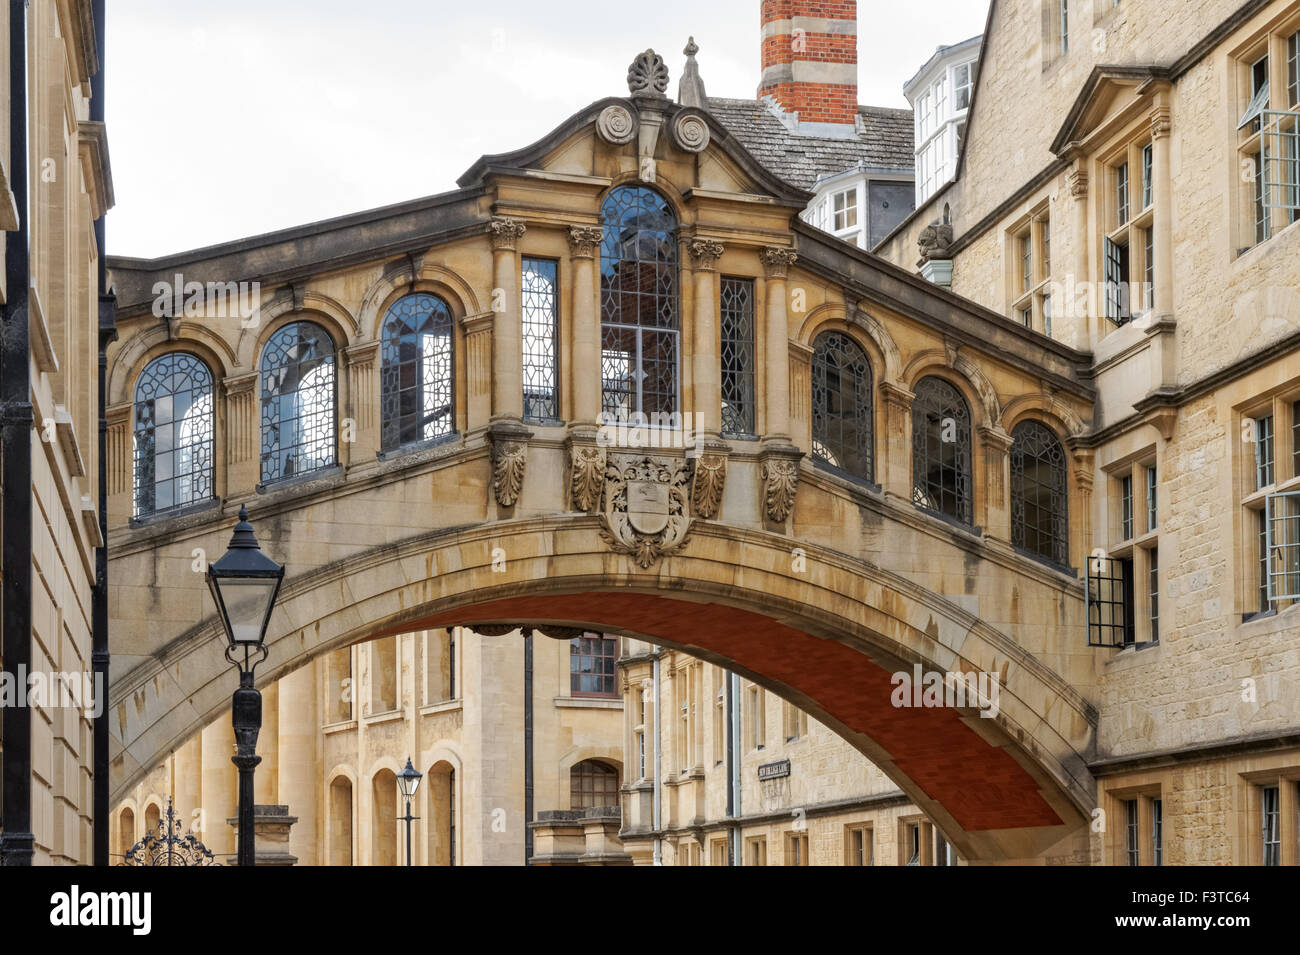 The Bridge of Sighs in Oxford Oxfordshire England United Kingdom UK Stock Photo